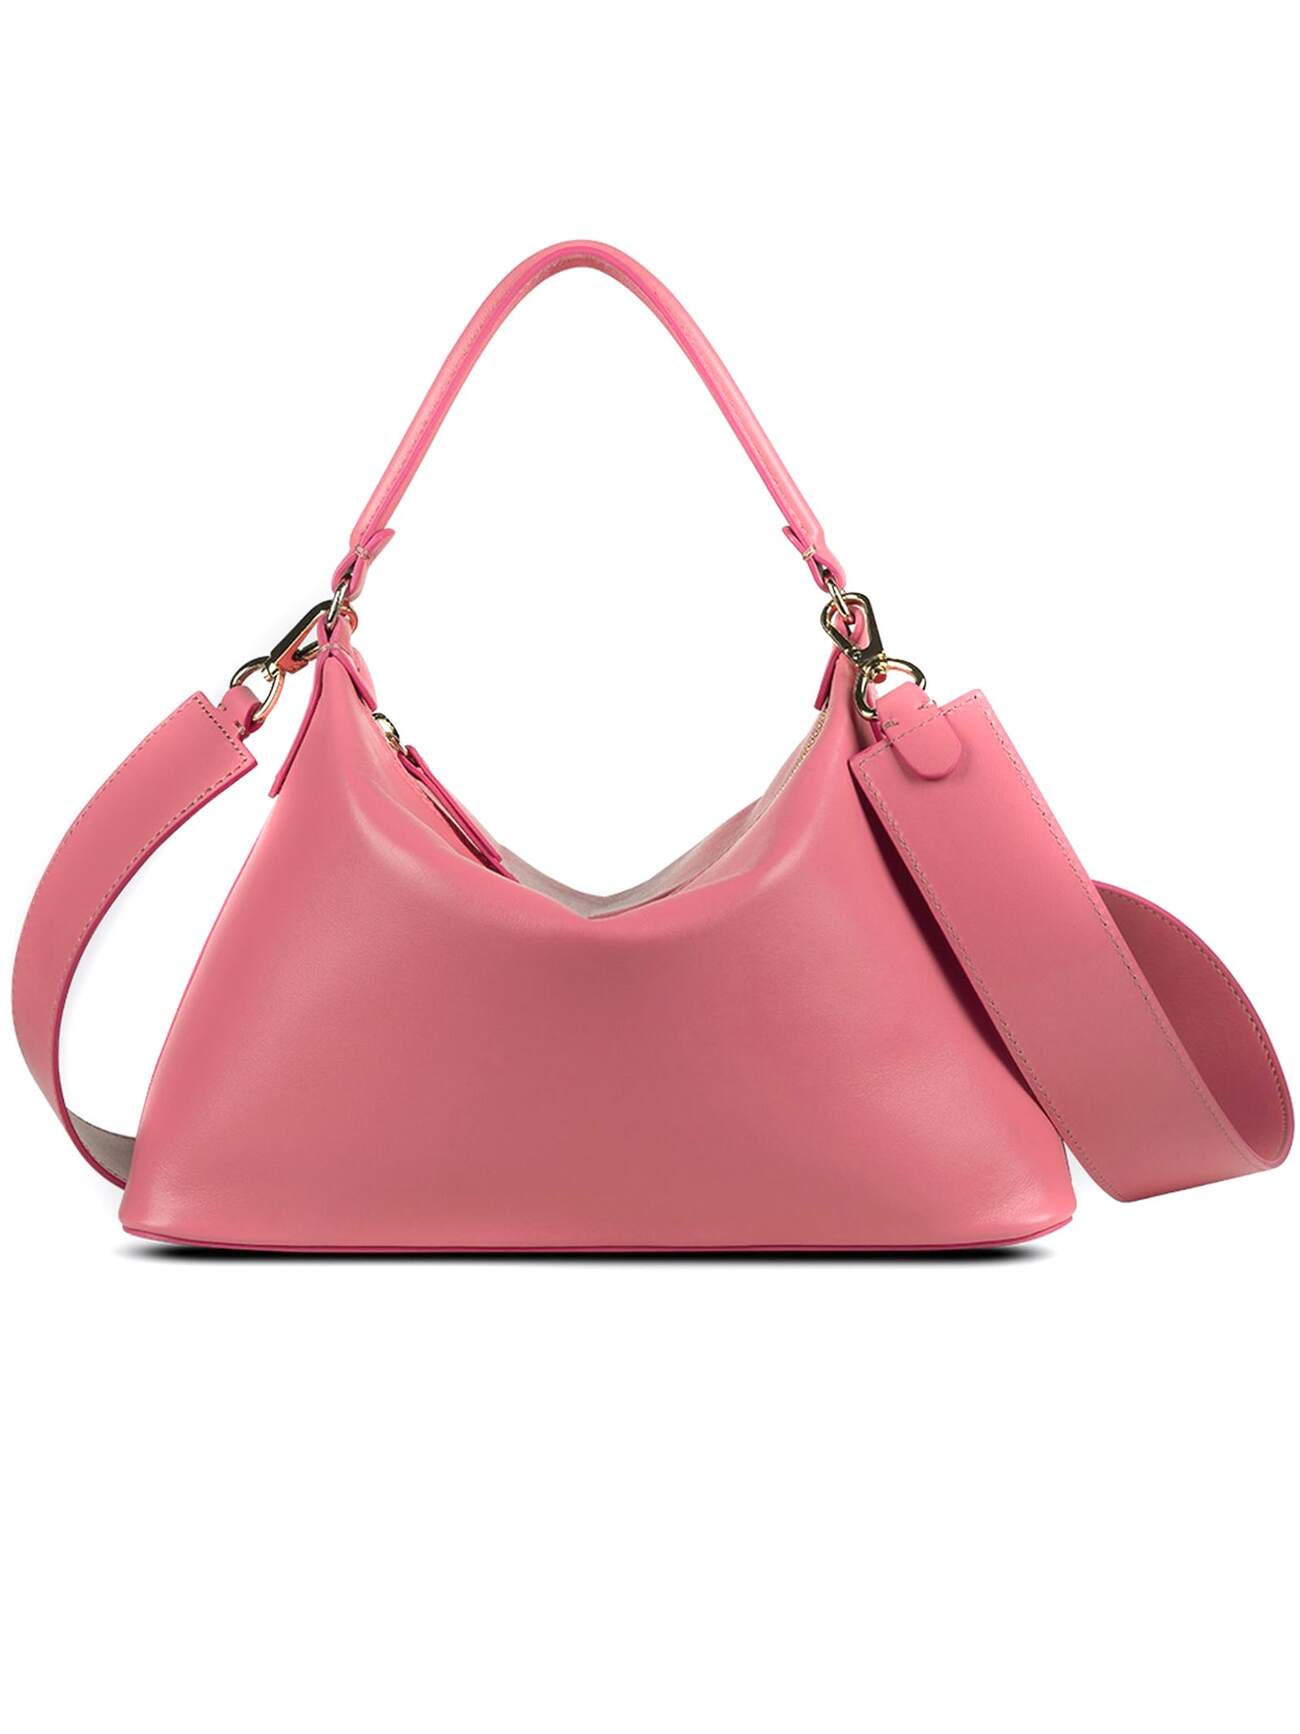 Leonie Hanne Pink Small Hobo Bag